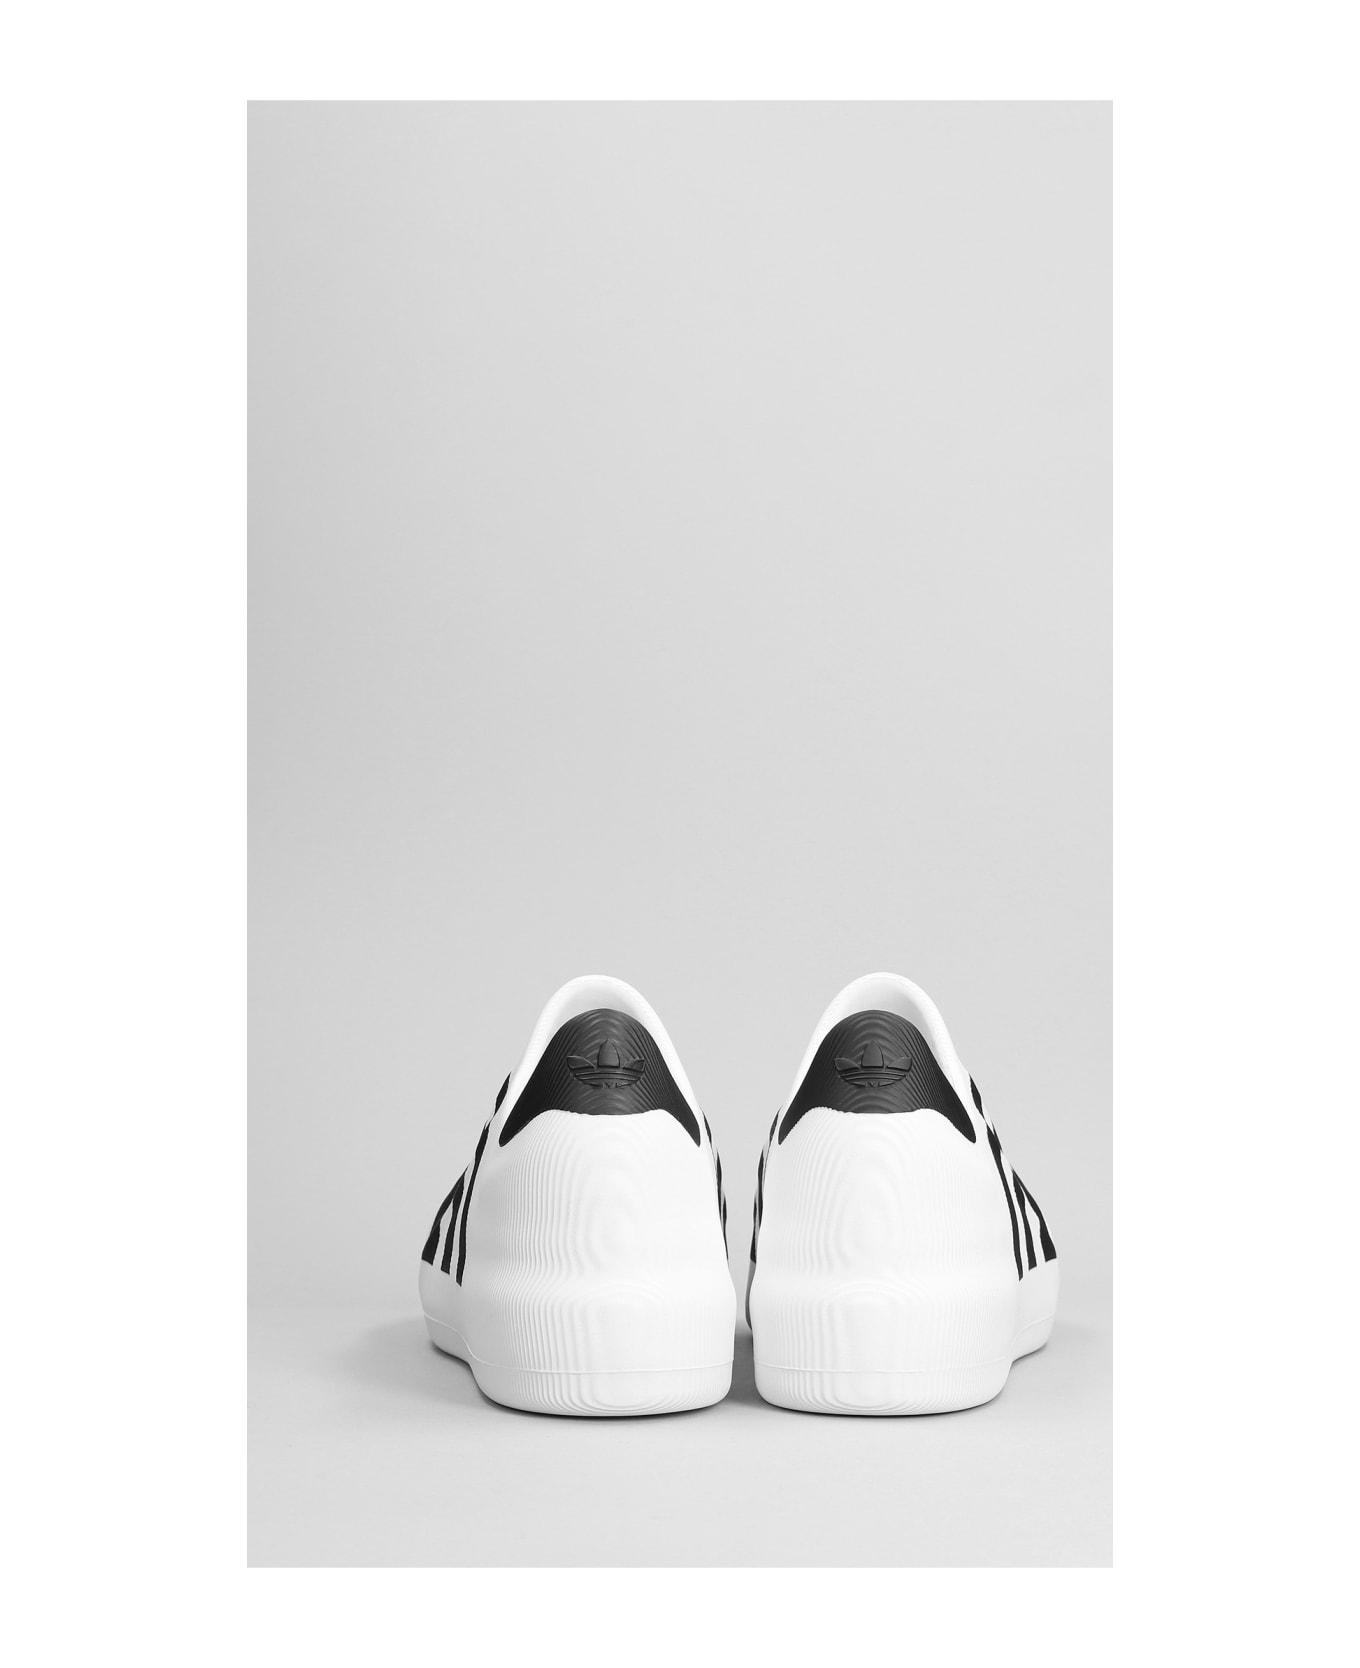 Adidas Adifom Superstar Sneakers In White Pvc - Cwhite Cblack Cblack